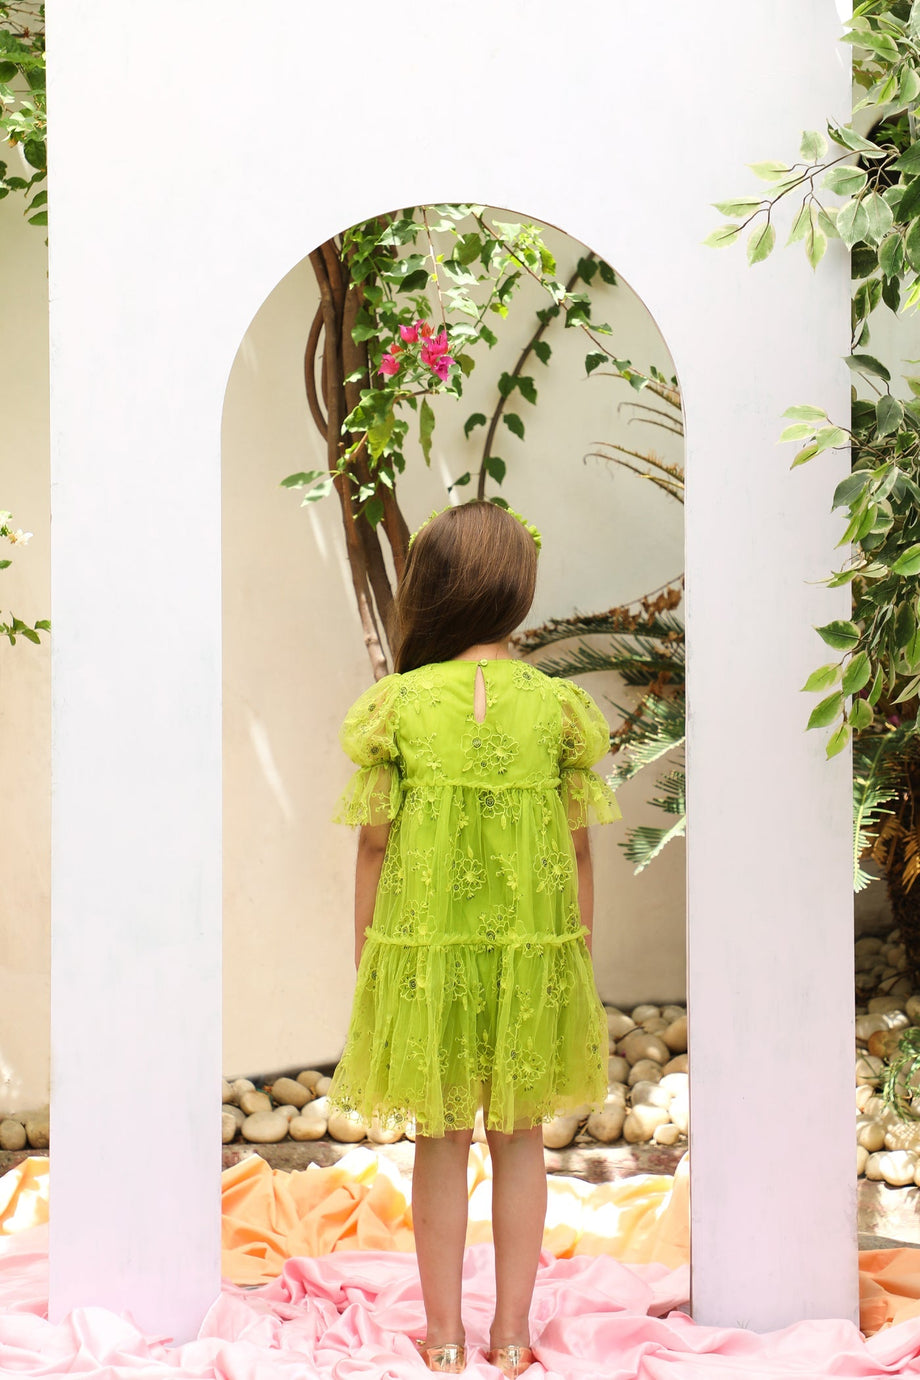 Relevé Fashion  Little Things Studio Sada Bahar Dress, Lime Green